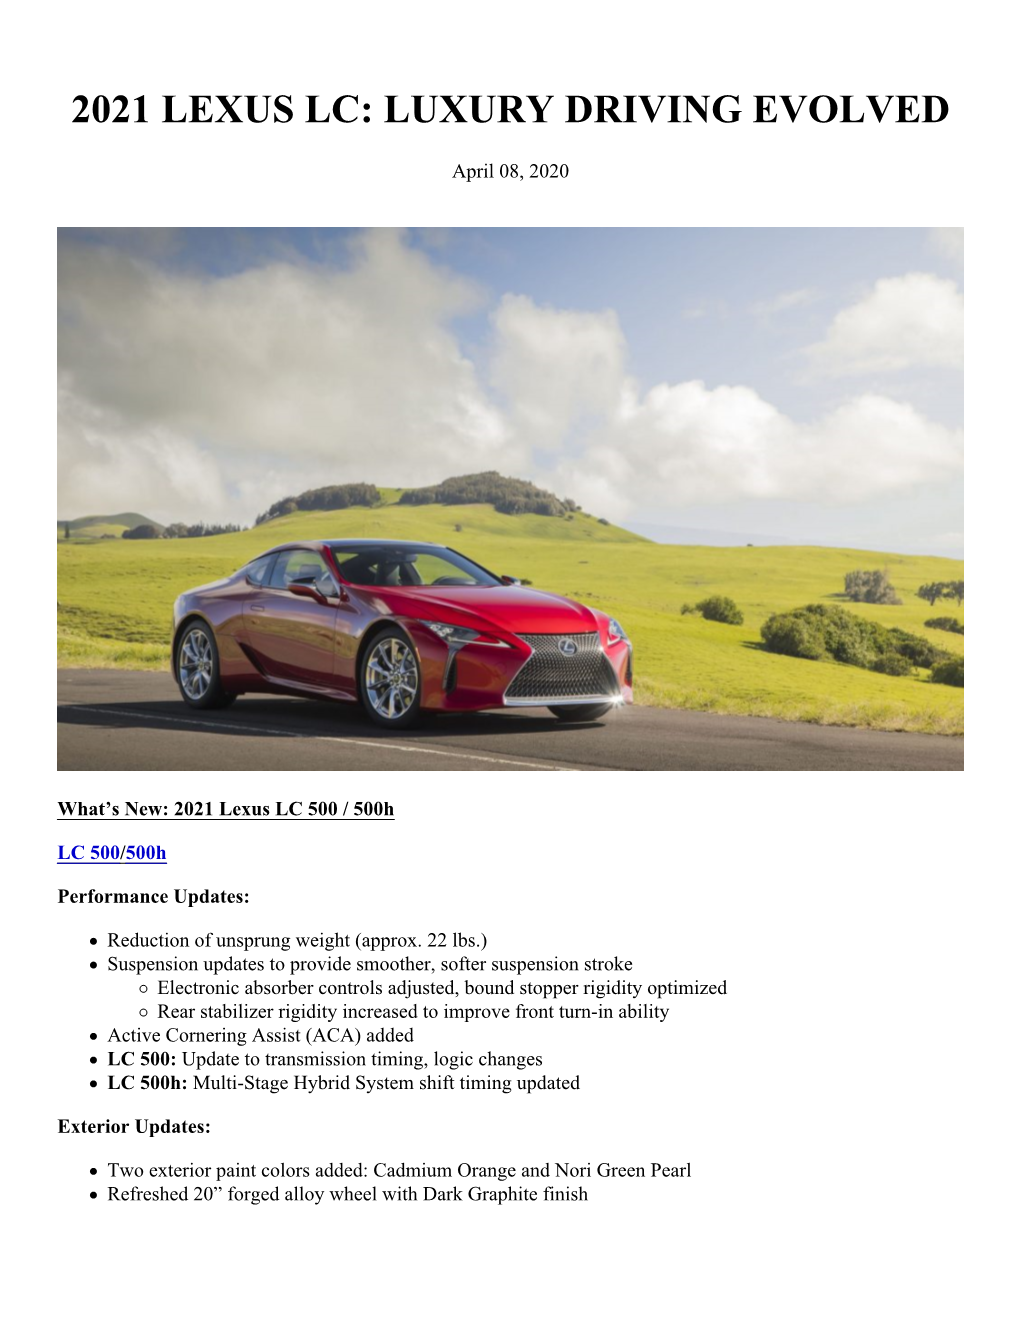 2021 Lexus Lc: Luxury Driving Evolved